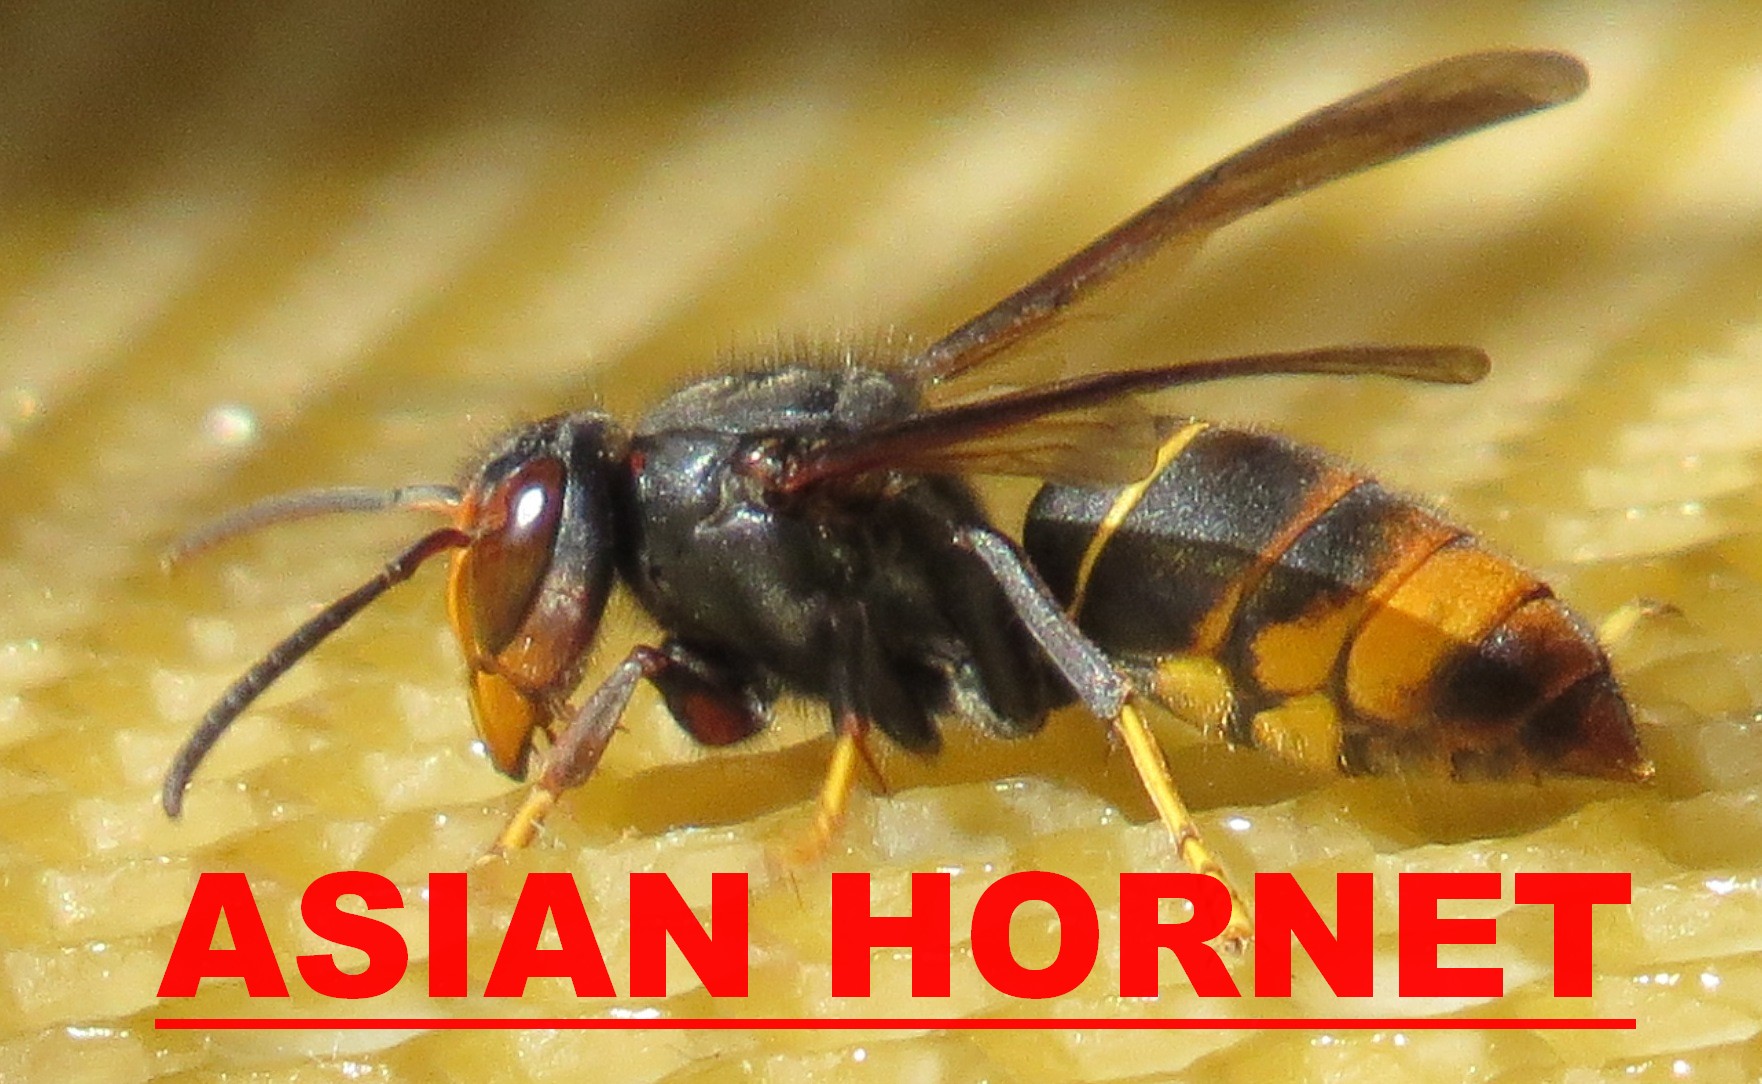 Asian hornet hunting rifle